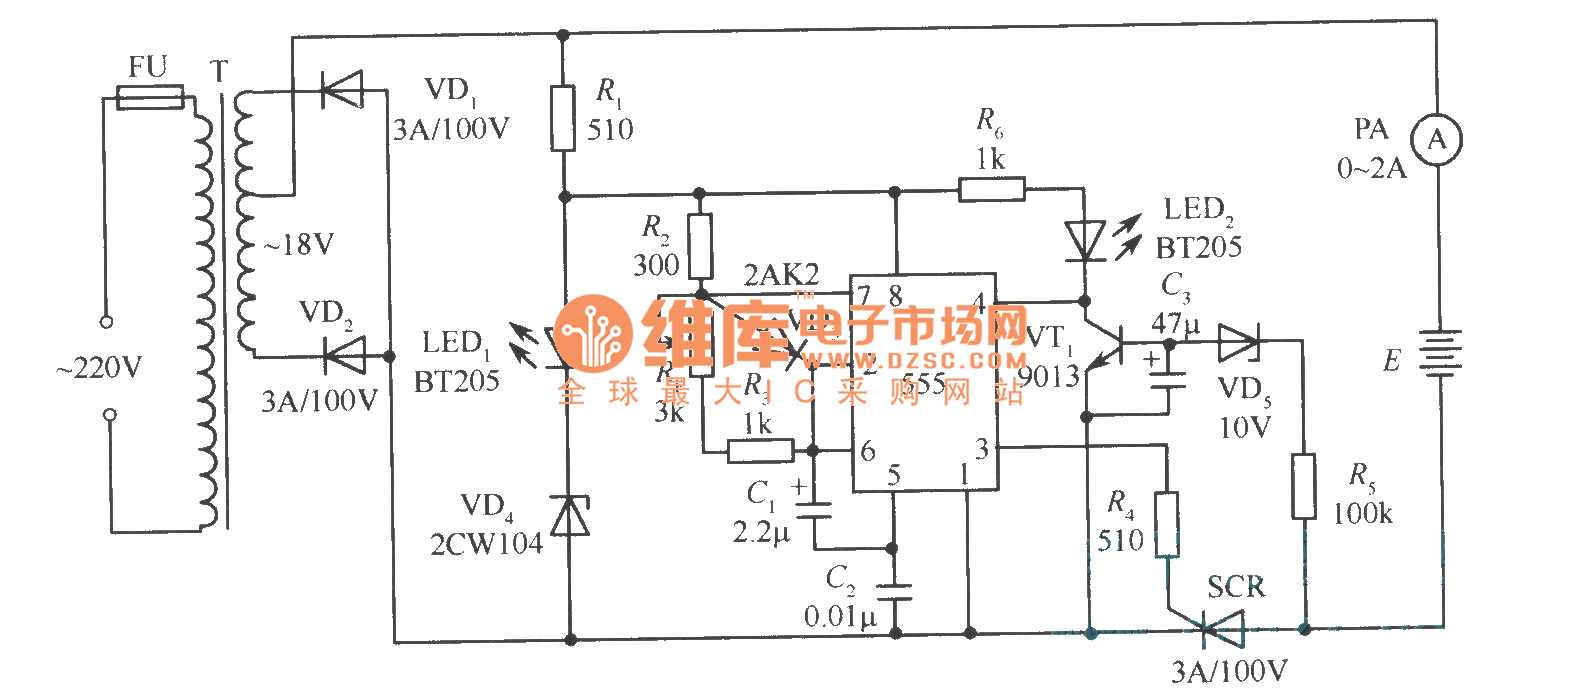 Motorcycle charger circuit diagram - Power_Supply_Circuit - Circuit